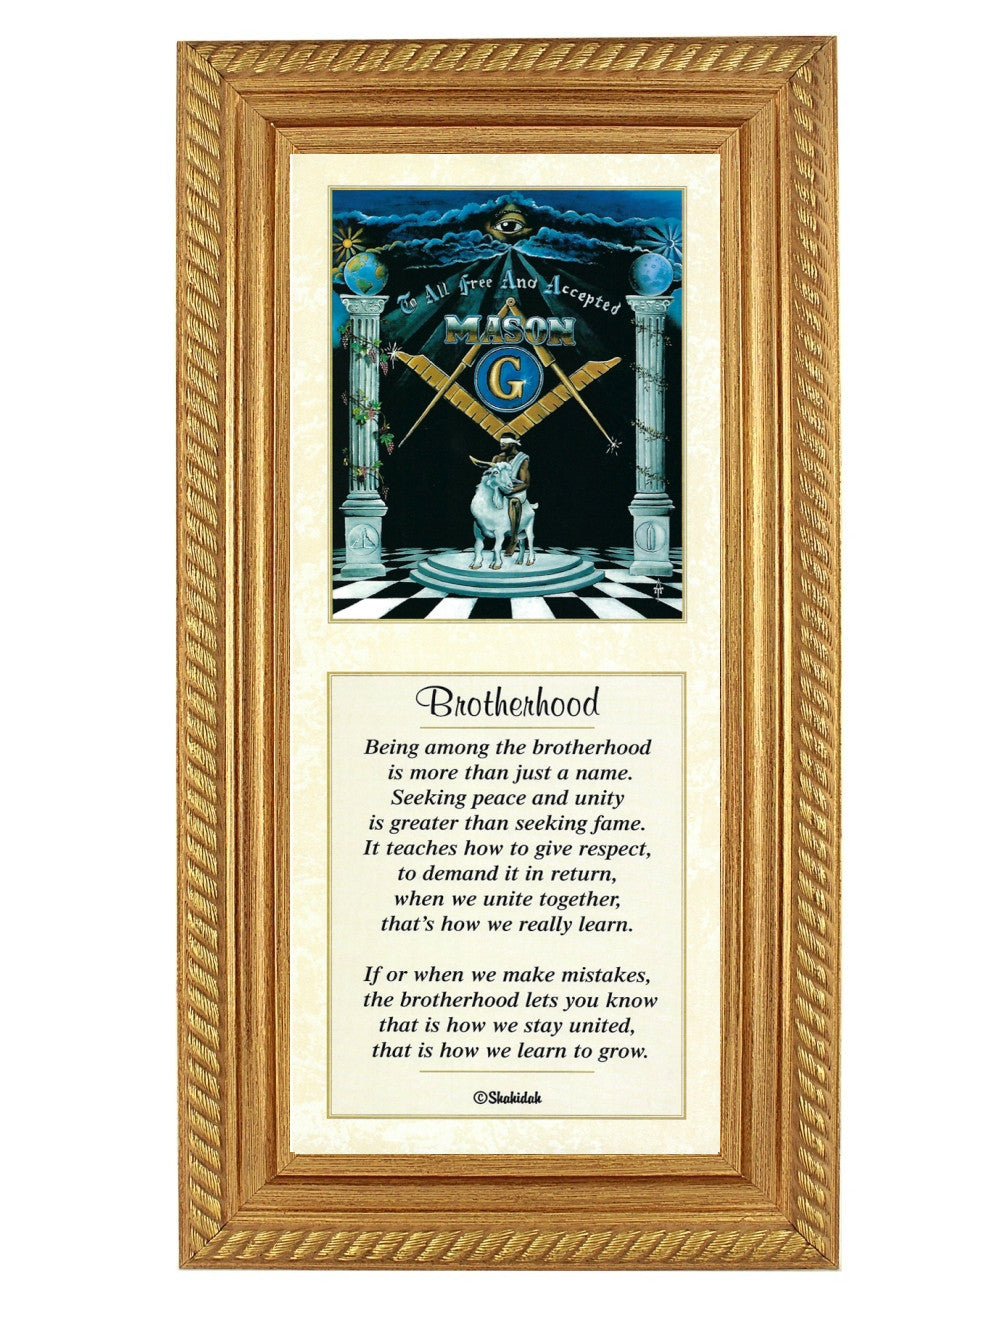 Brotherhood (Freemasonry) by Tracy Andrews and Shahidah (Literary Art Print)